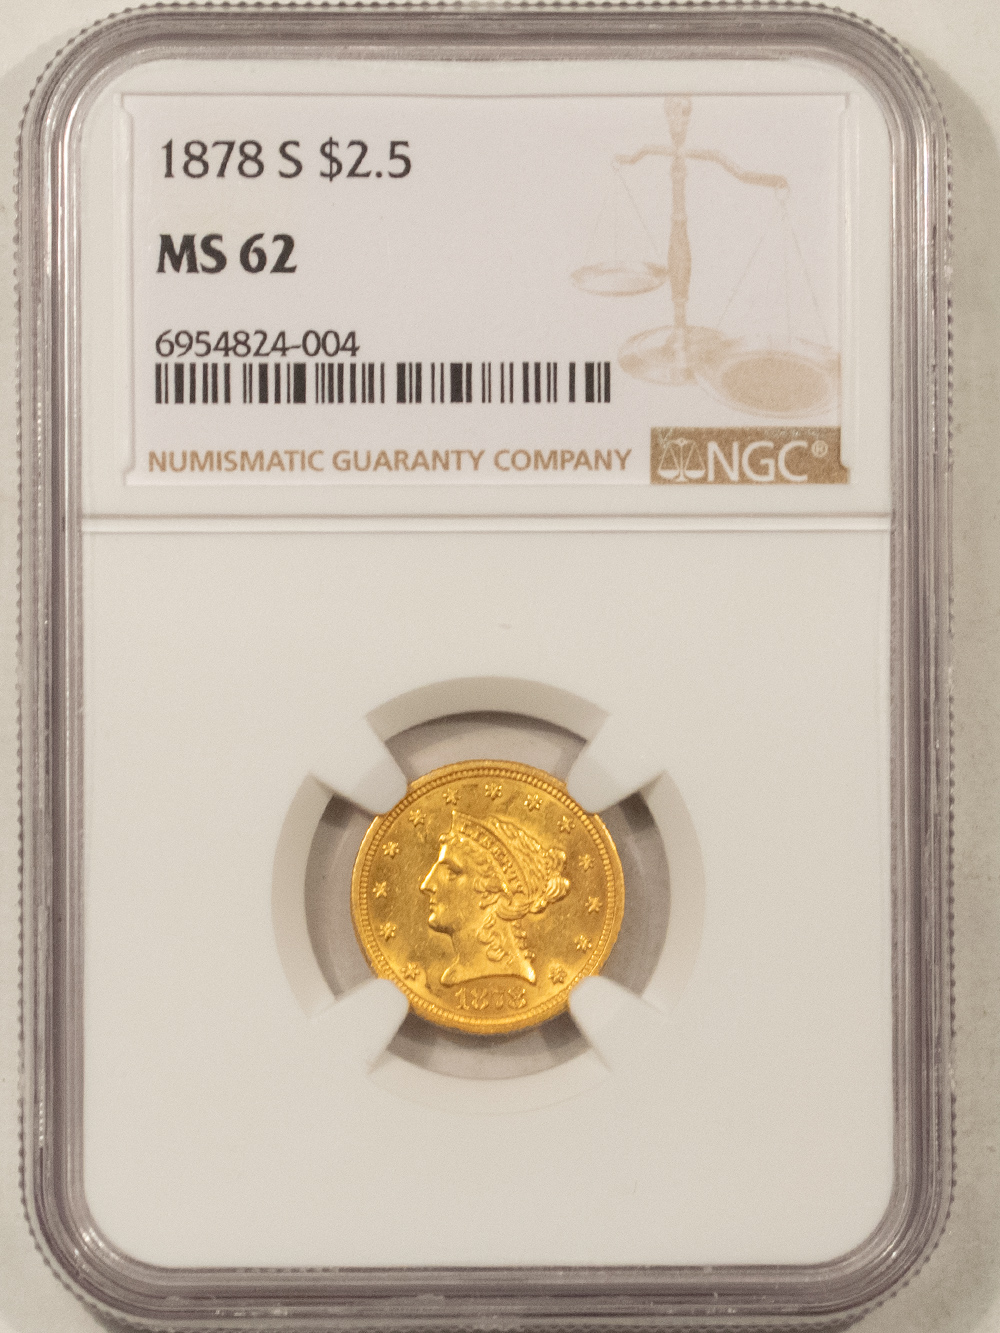 1878-S $2.5 LIBERTY GOLD QUARTER EAGLE - NGC MS-62